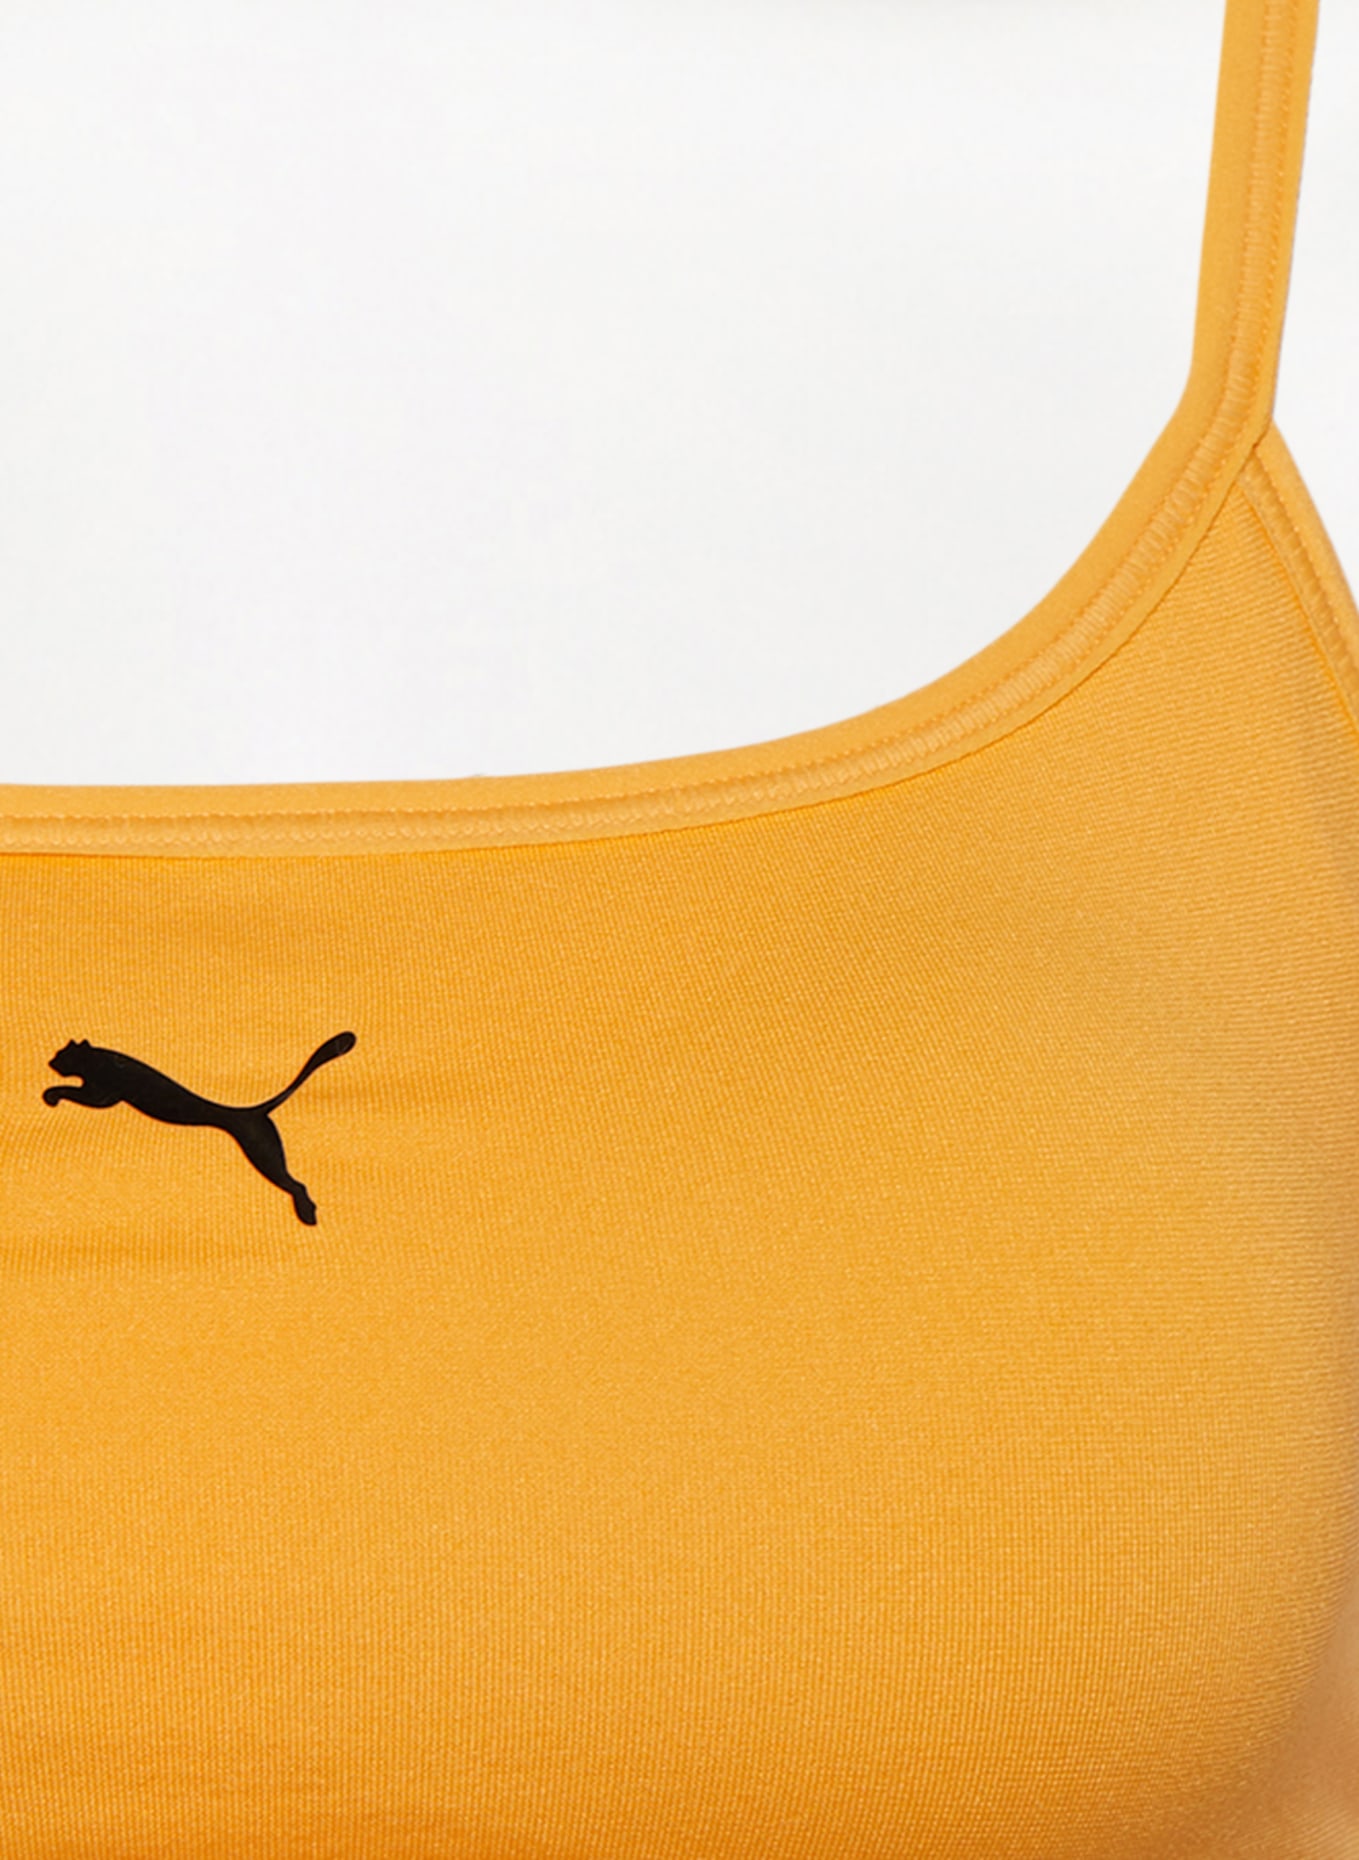 Puma - Puma Sports bra on Designer Wardrobe